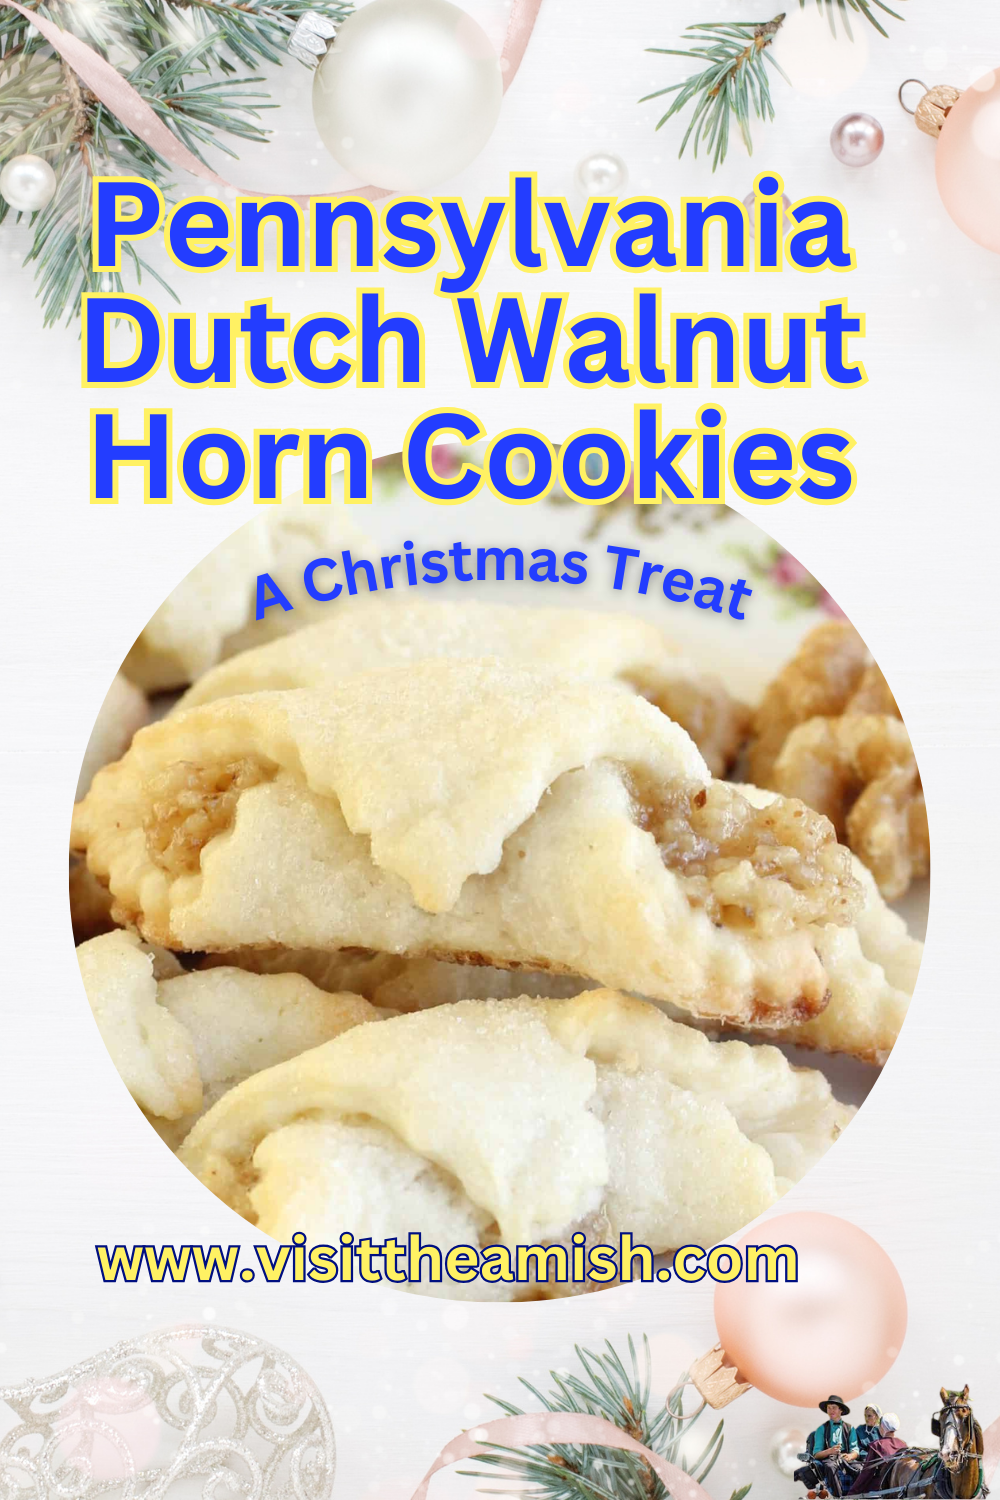 Pennsylvania Dutch Walnut Horn Cookies